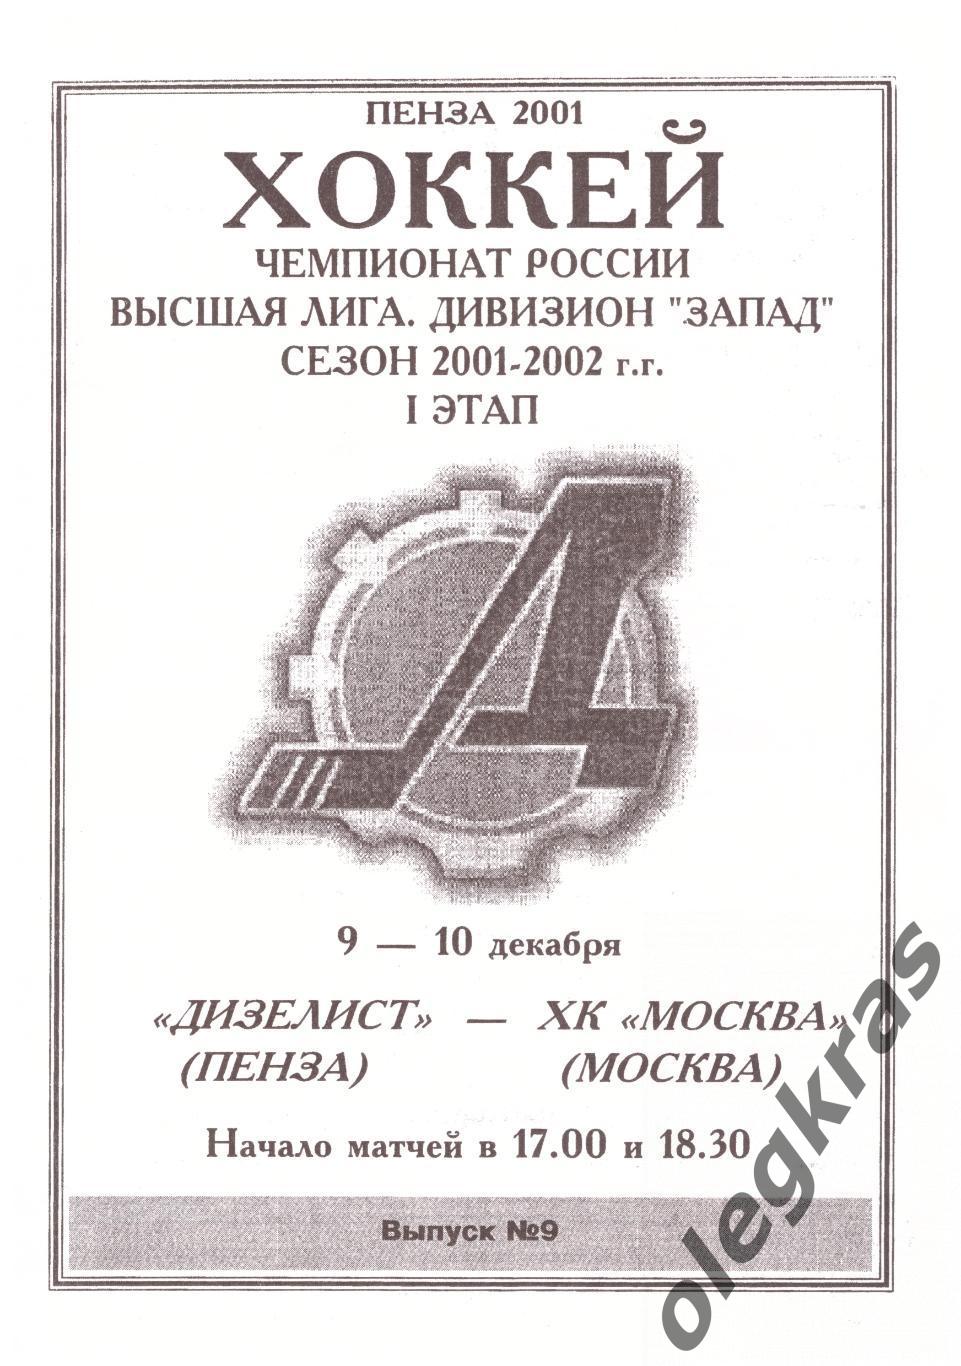 Дизелист(Пенза) - ХК Москва(Москва) - 9-10 декабря 2001 года.